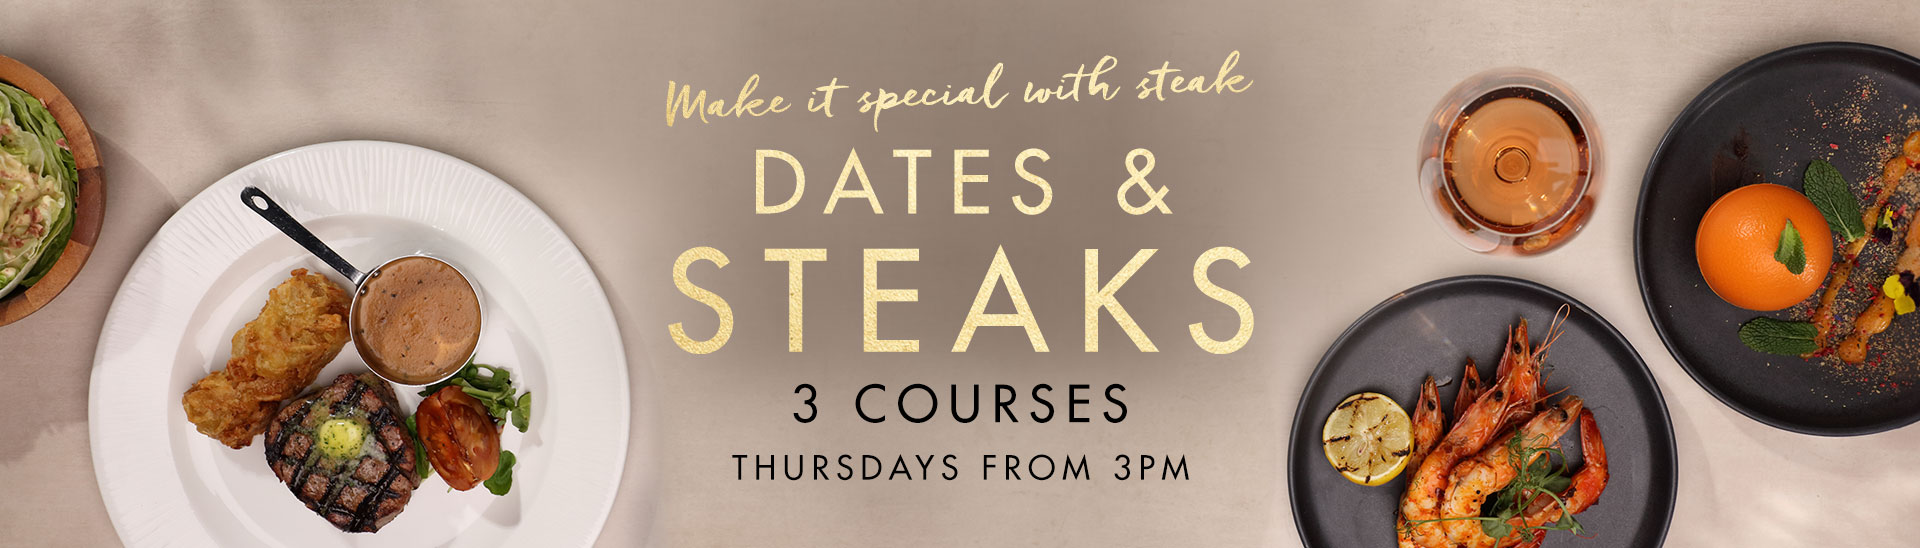 Dates & Steaks at Miller & Carter Northampton